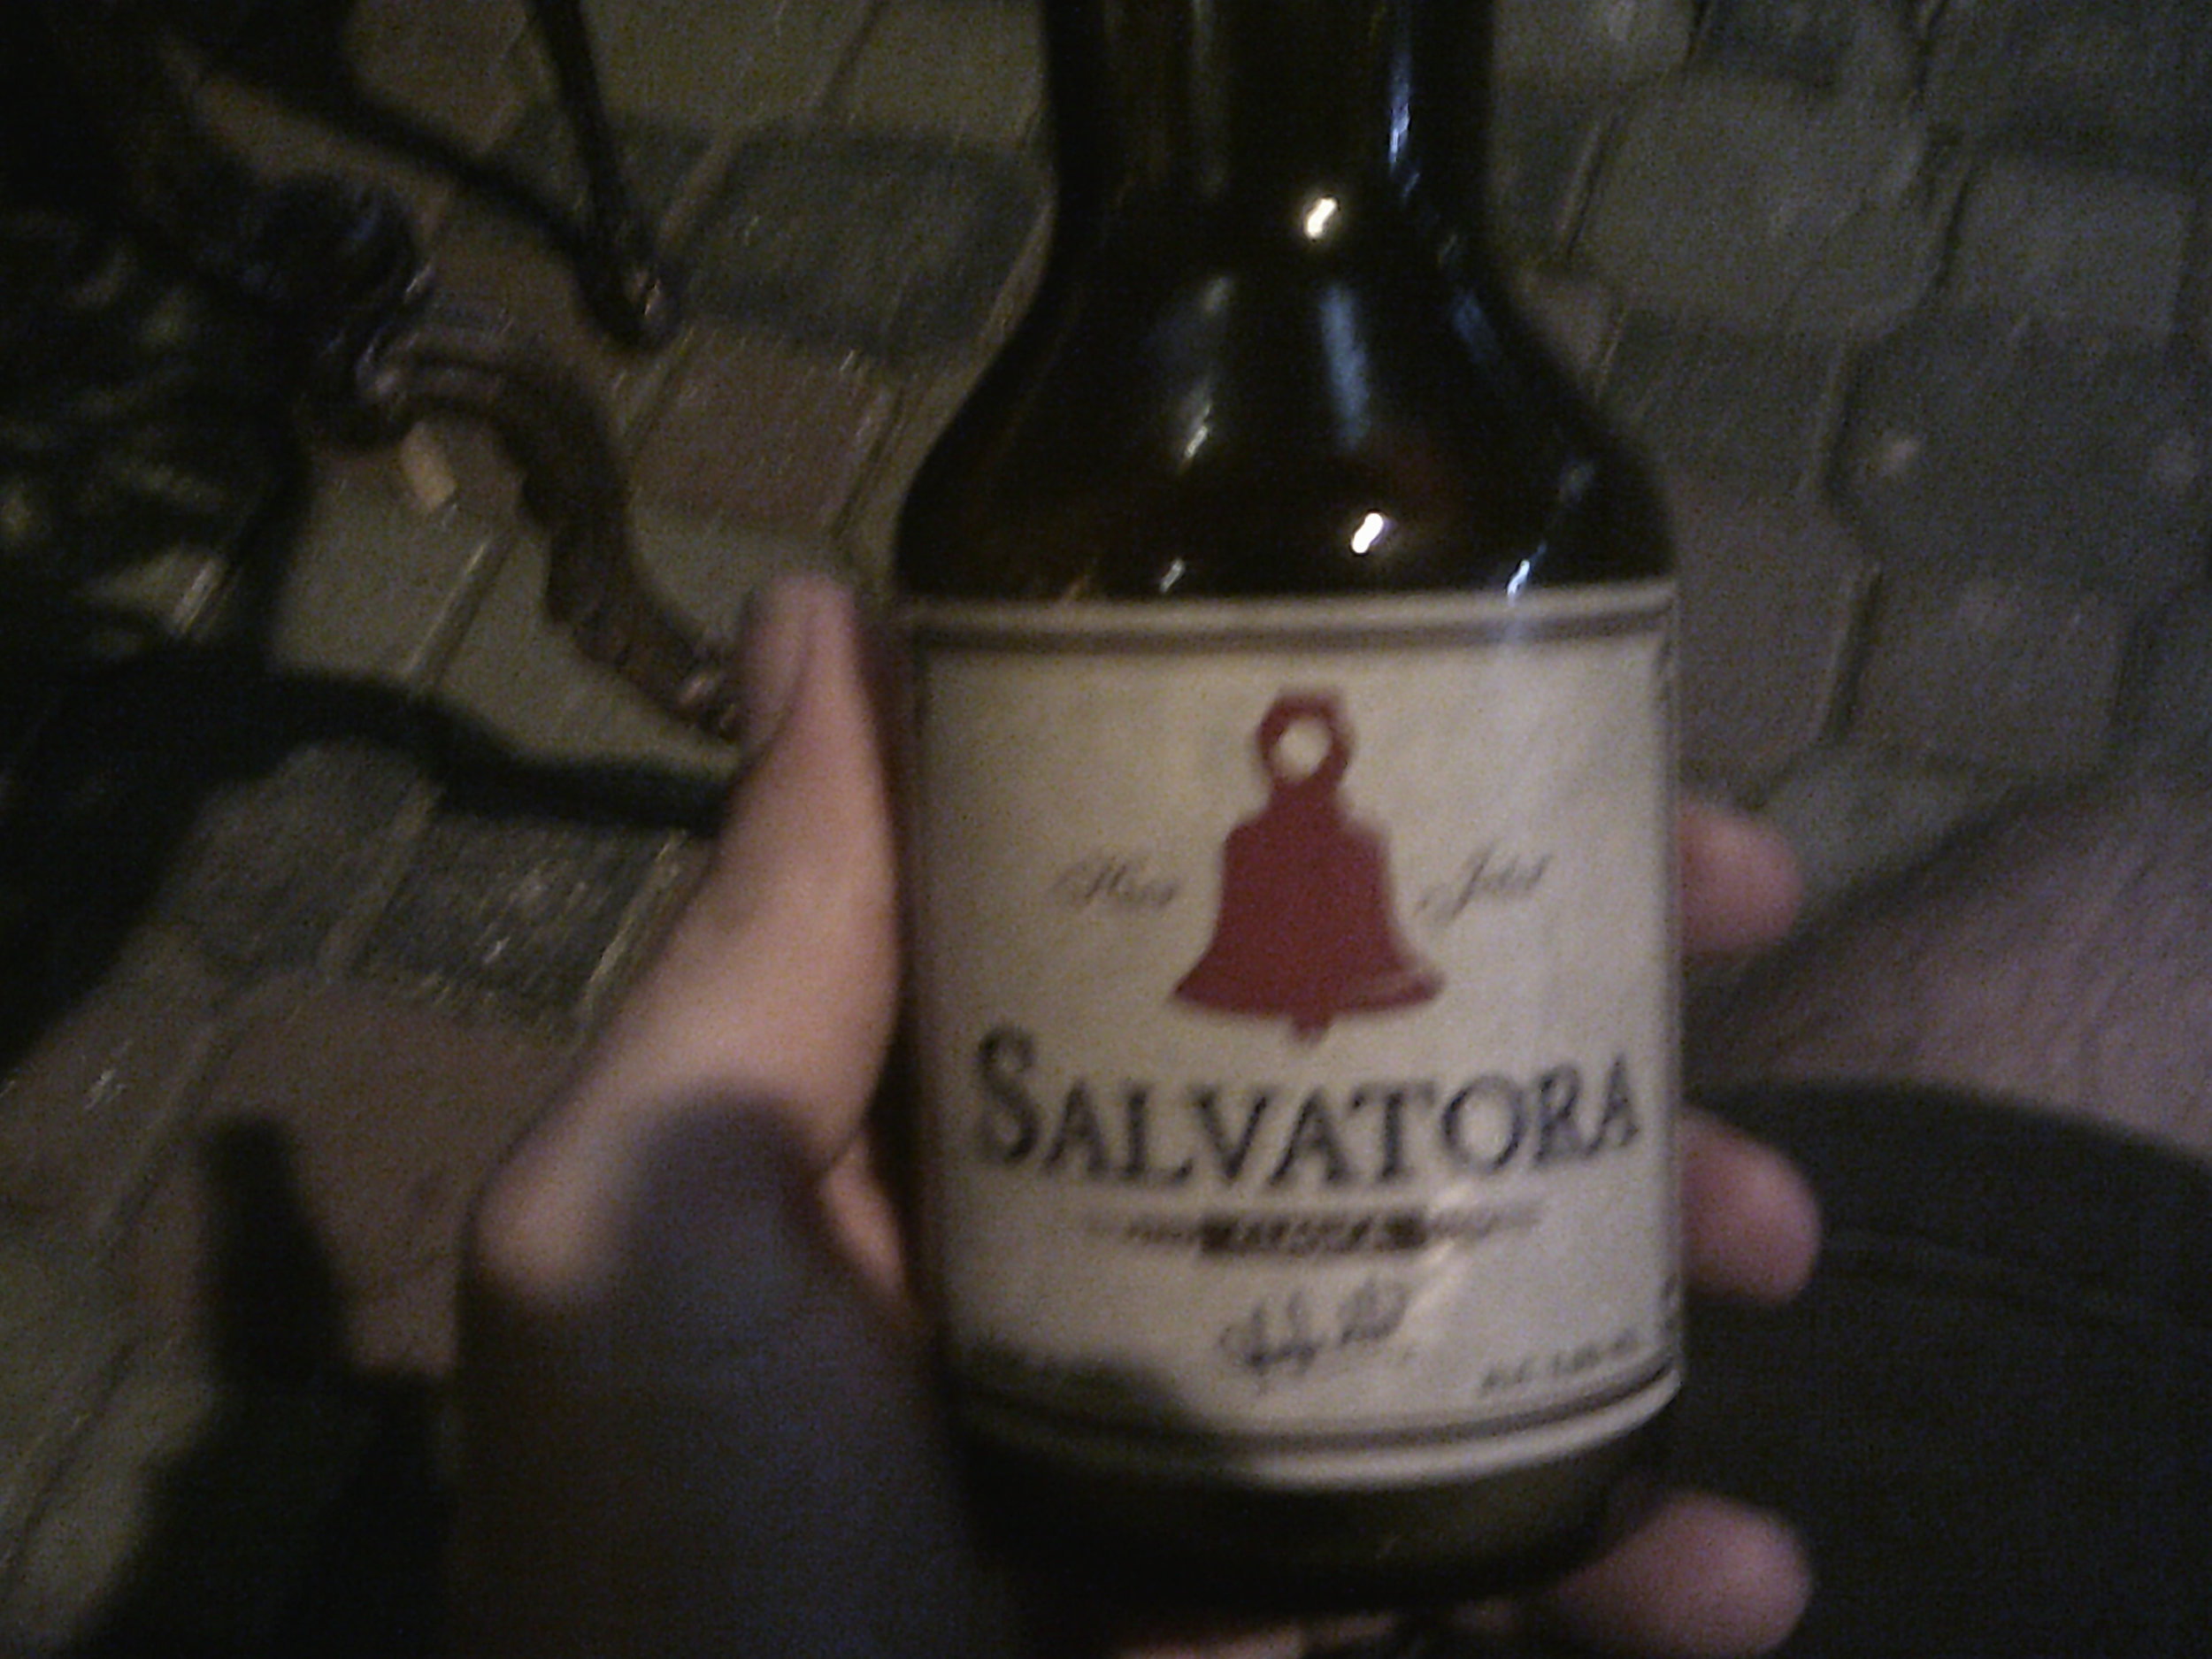 Salvatora-craft beer.jpg